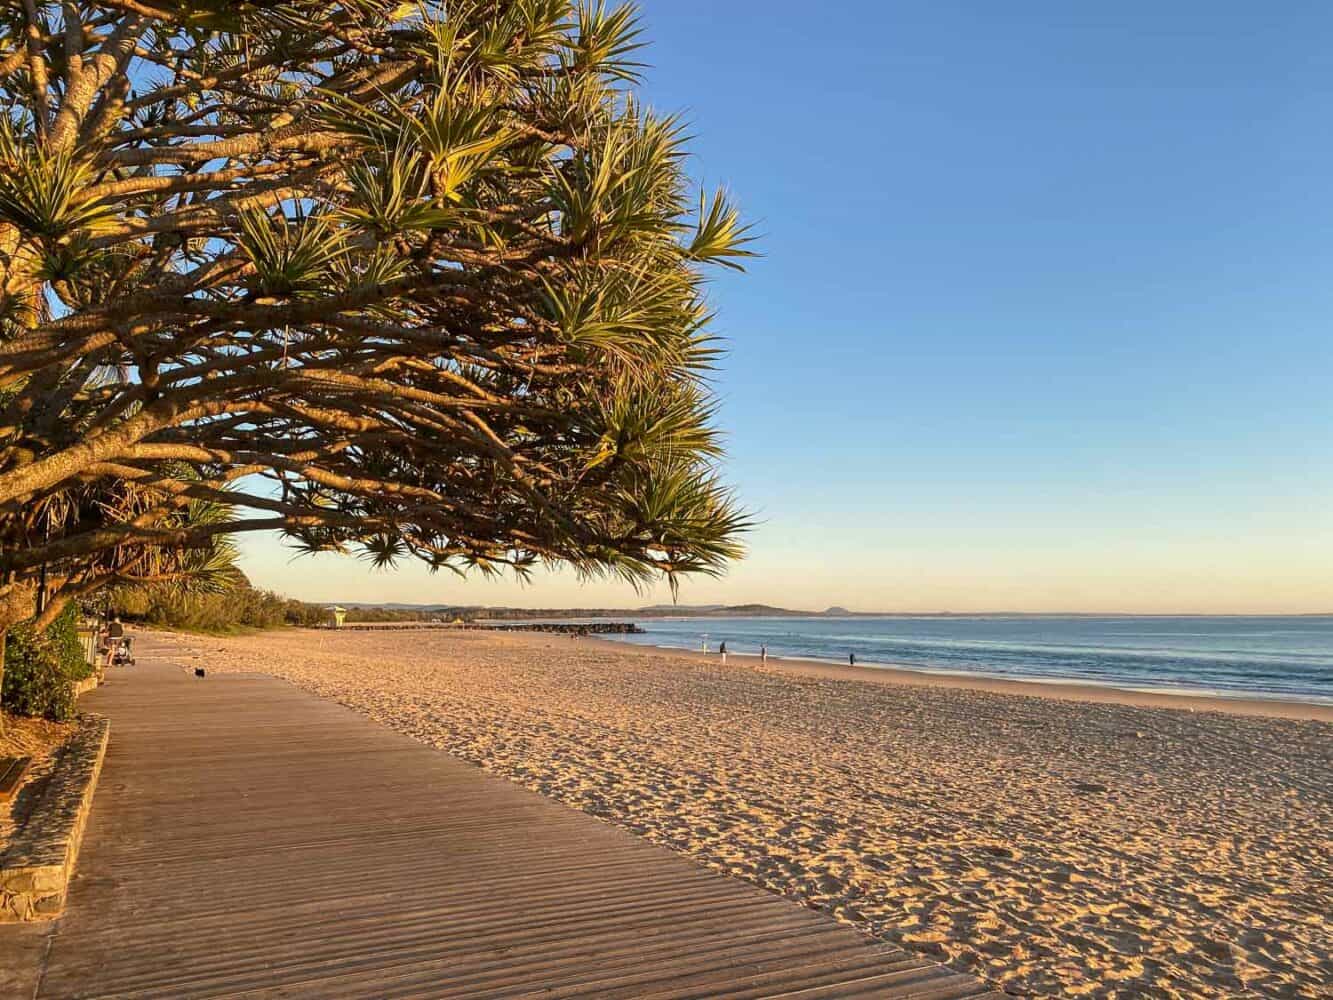 Main Beach boardwalk, early morning, Noosa, Queensland, Australia